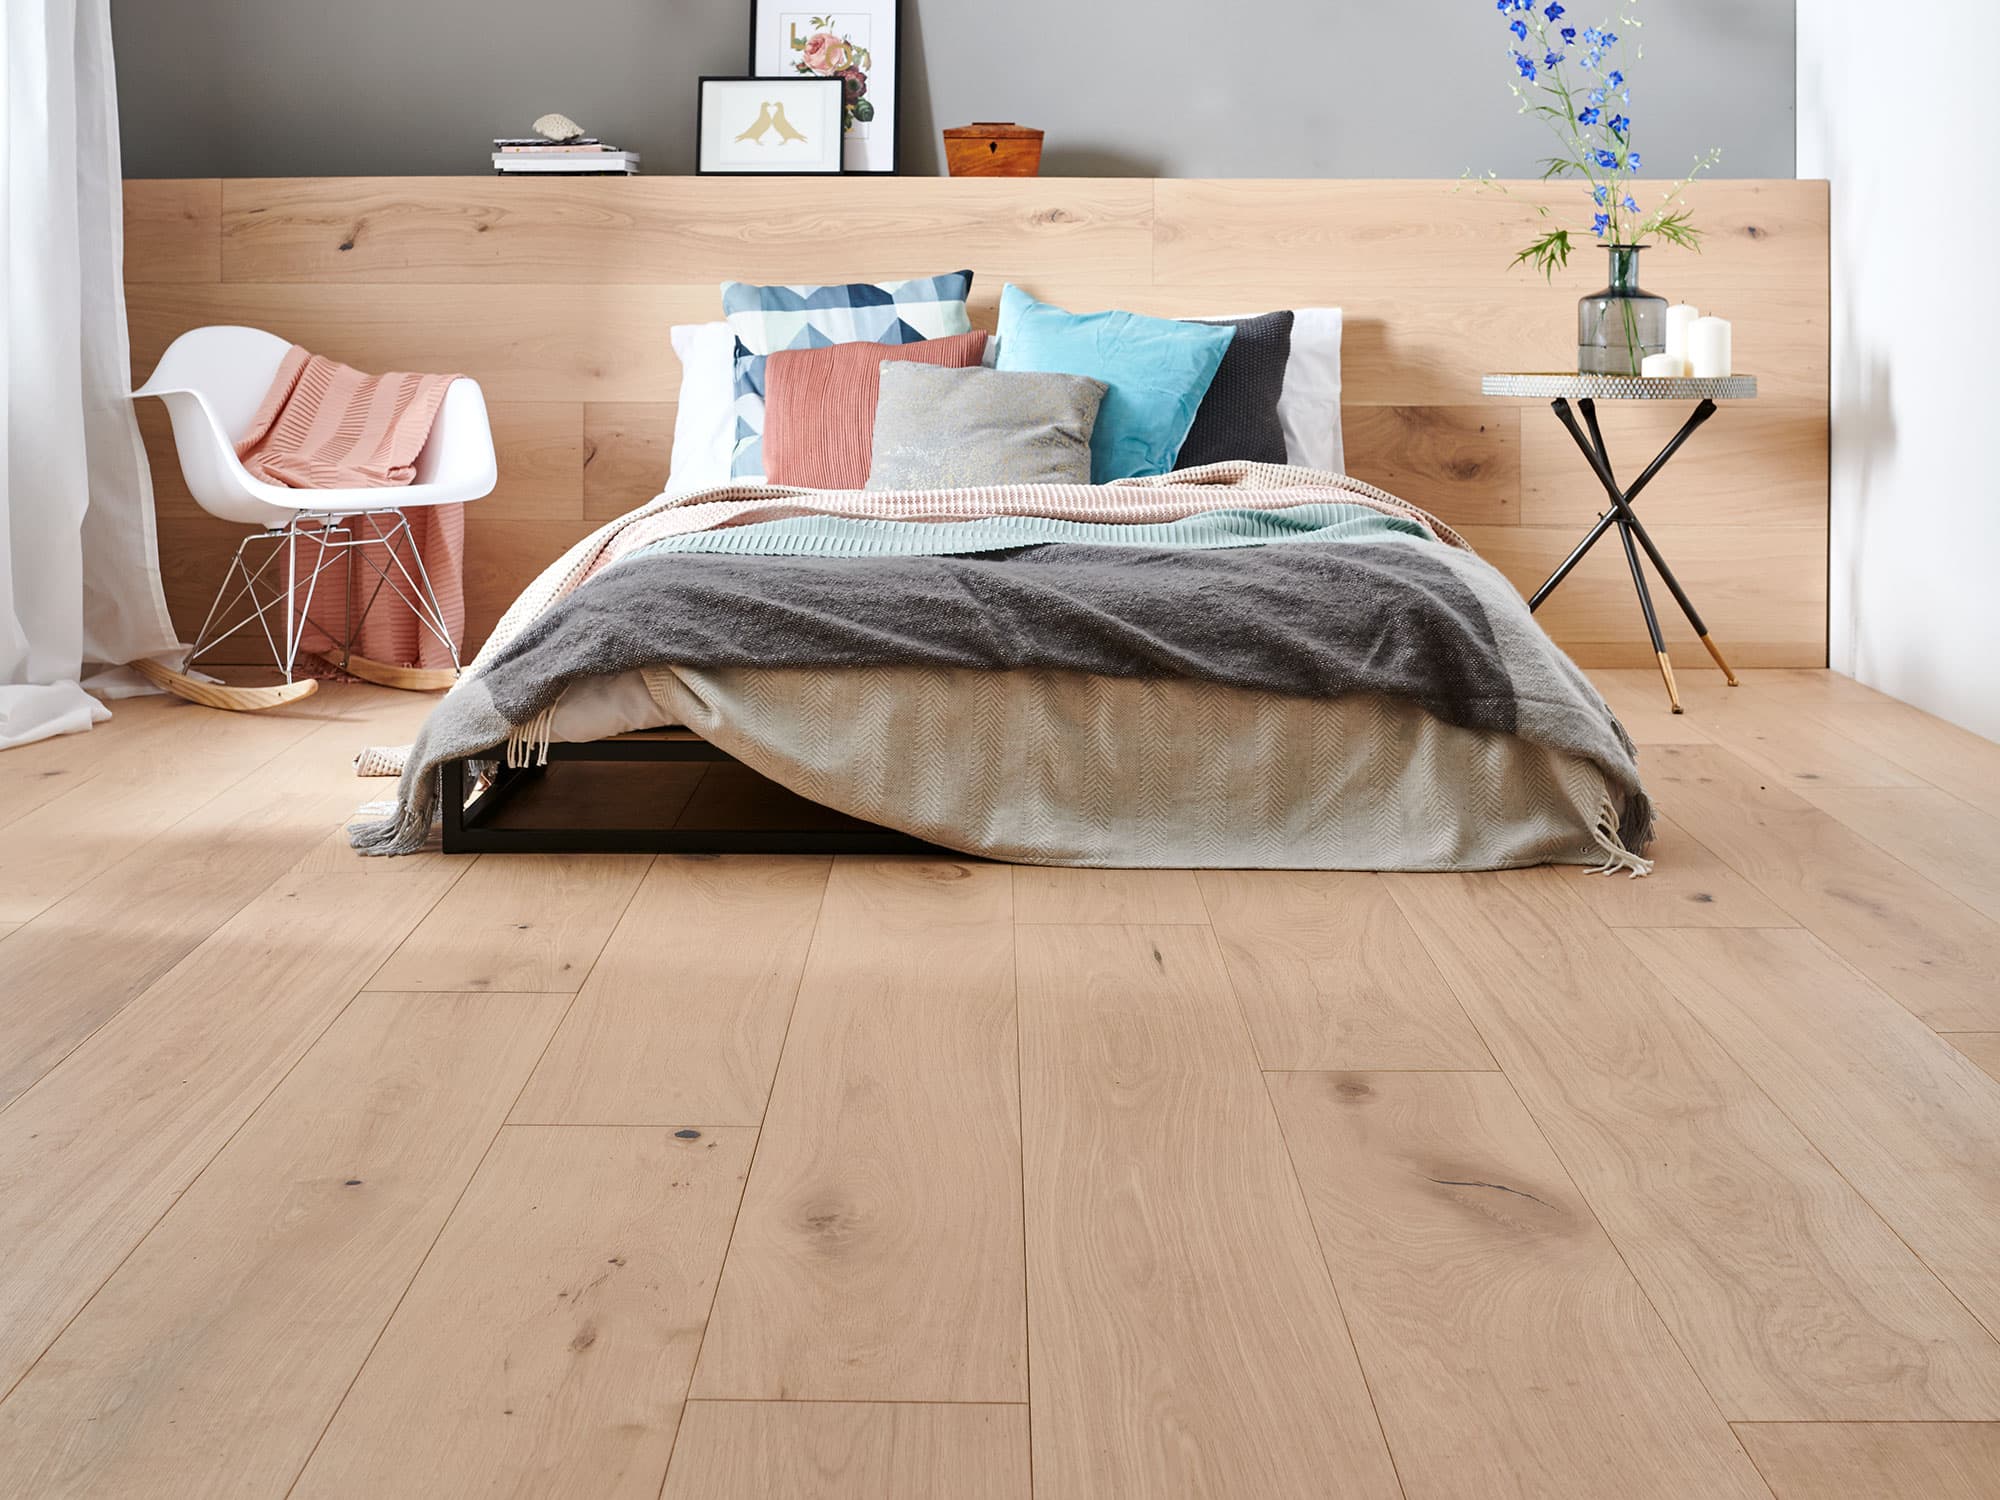 engineered hardwood flooring harlech raw oak in a bedroom setting